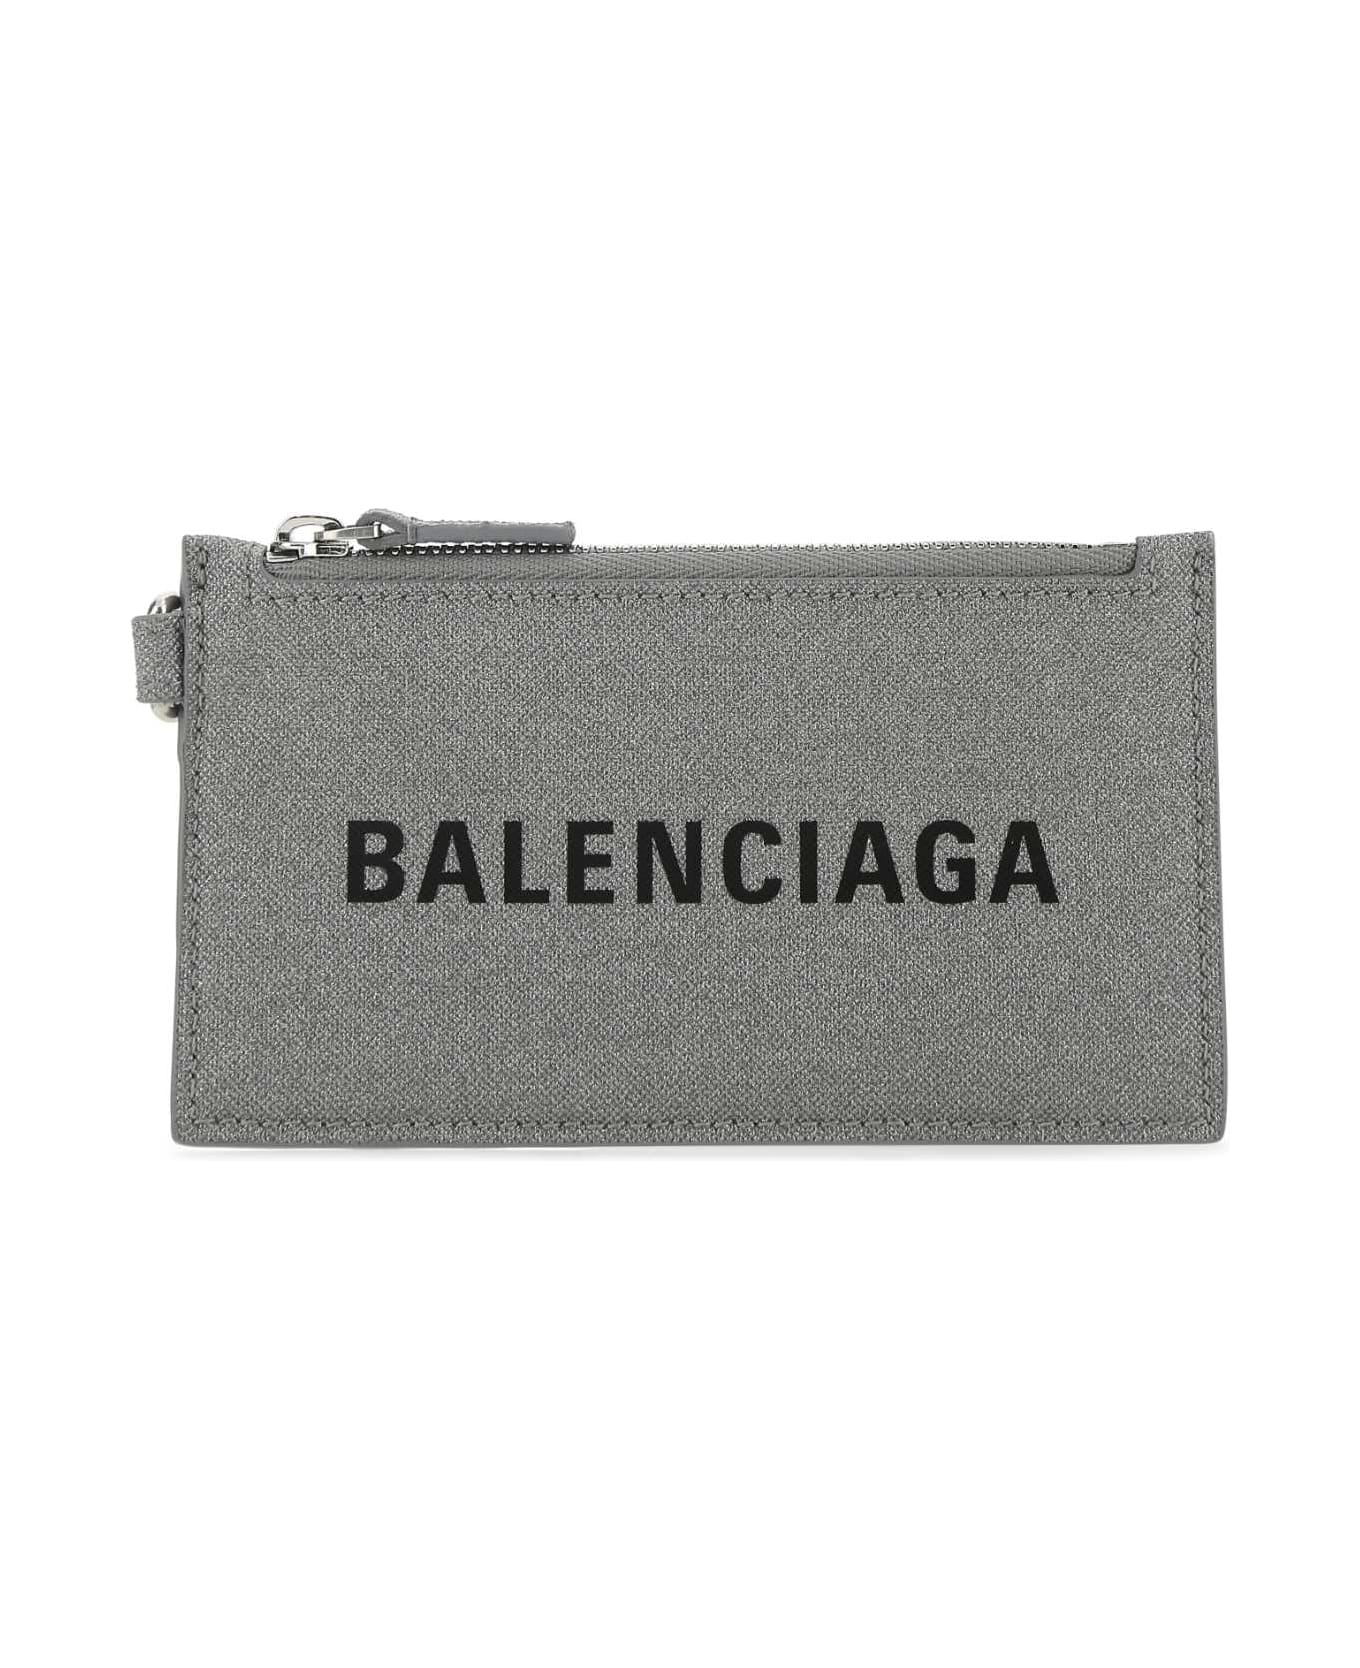 Balenciaga Grey Fabric Card Holder - 1501